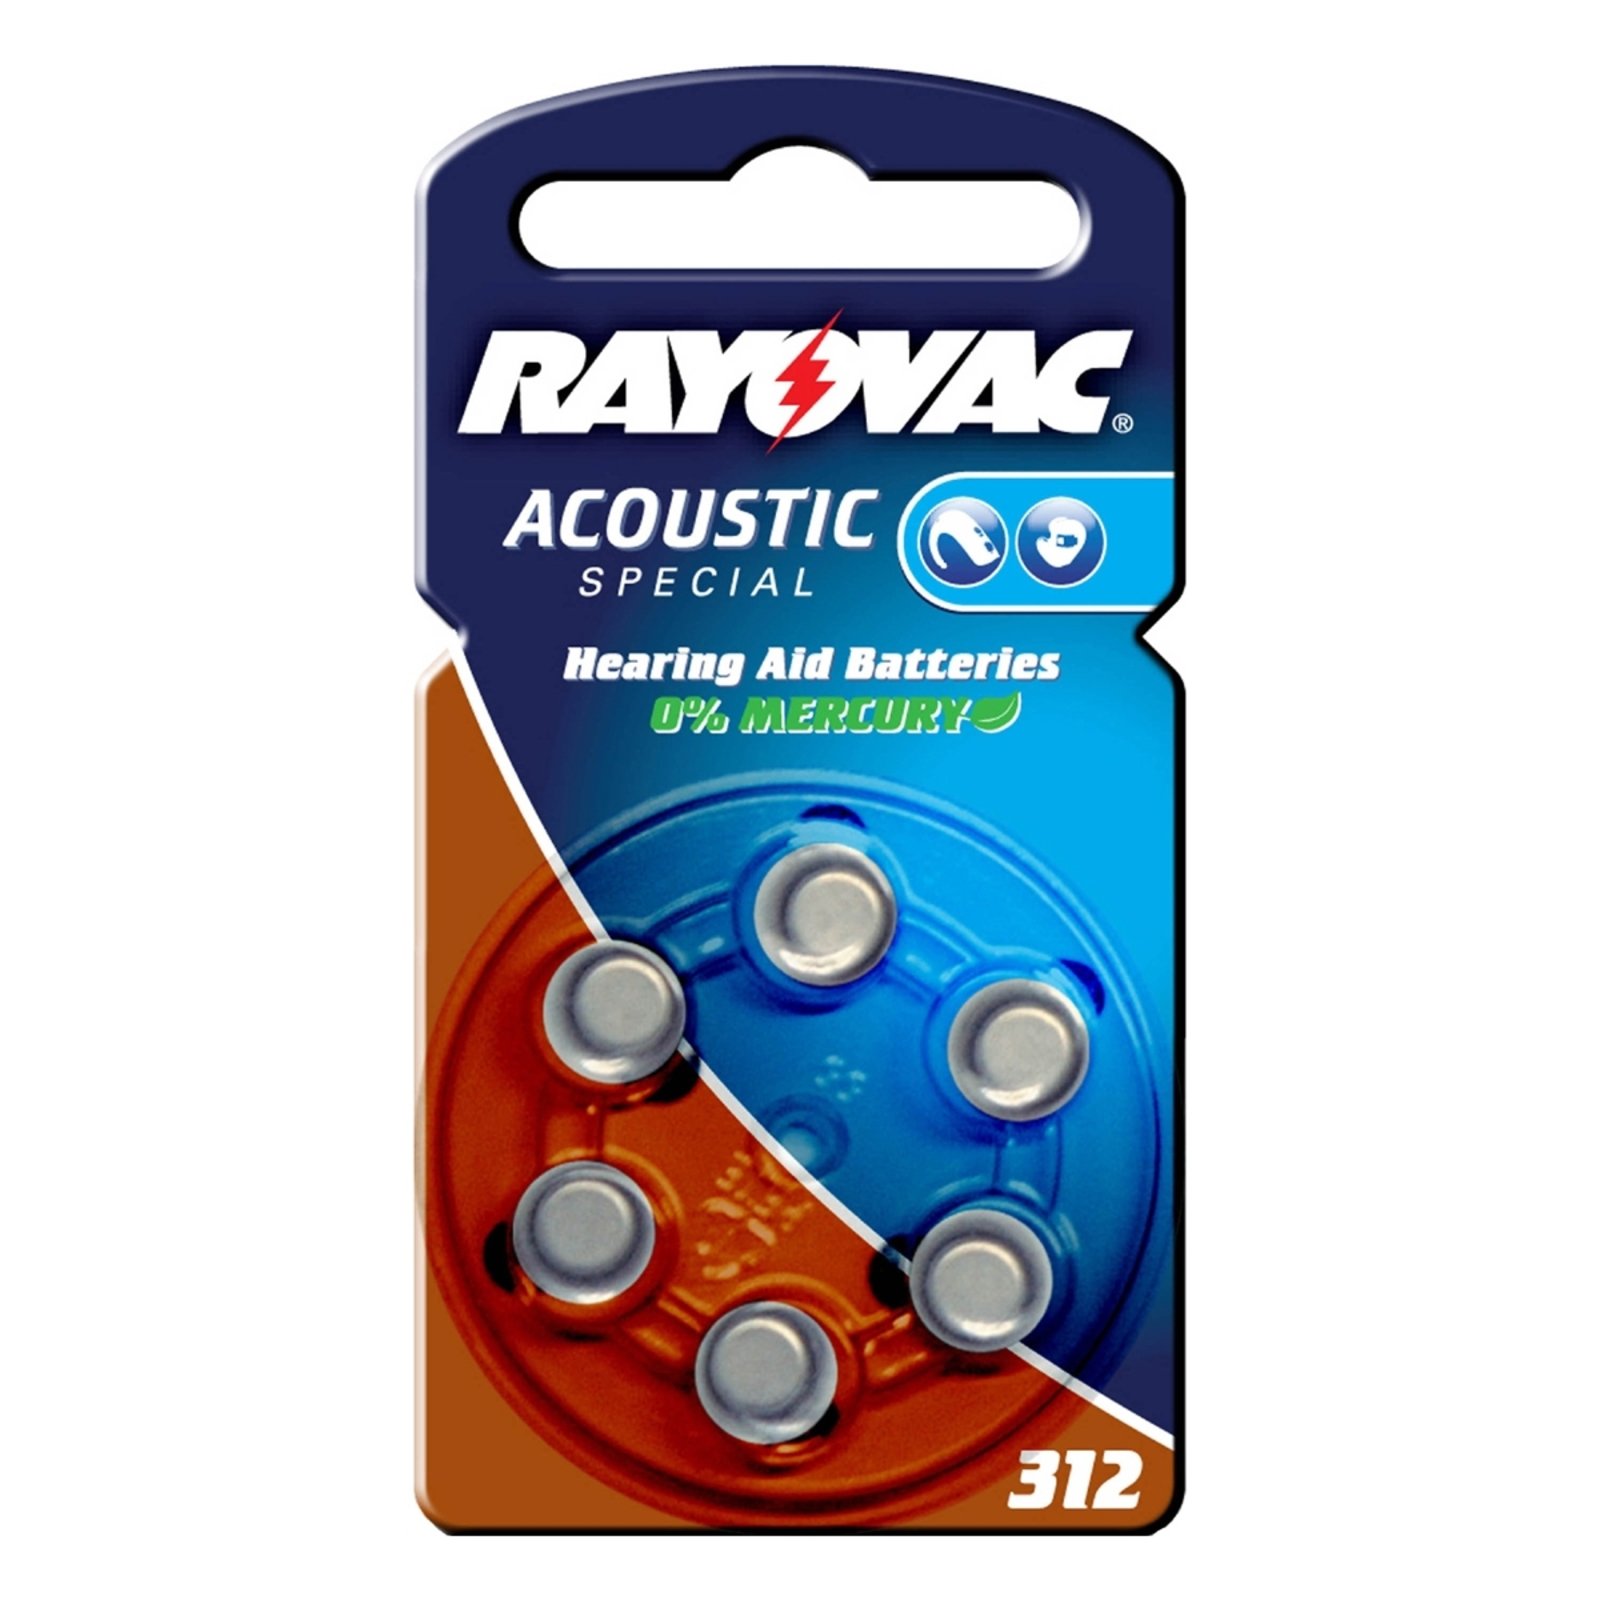 Dugmasta ćelija Rayovac 312 Acoustic 1.4V, 180m/Ah